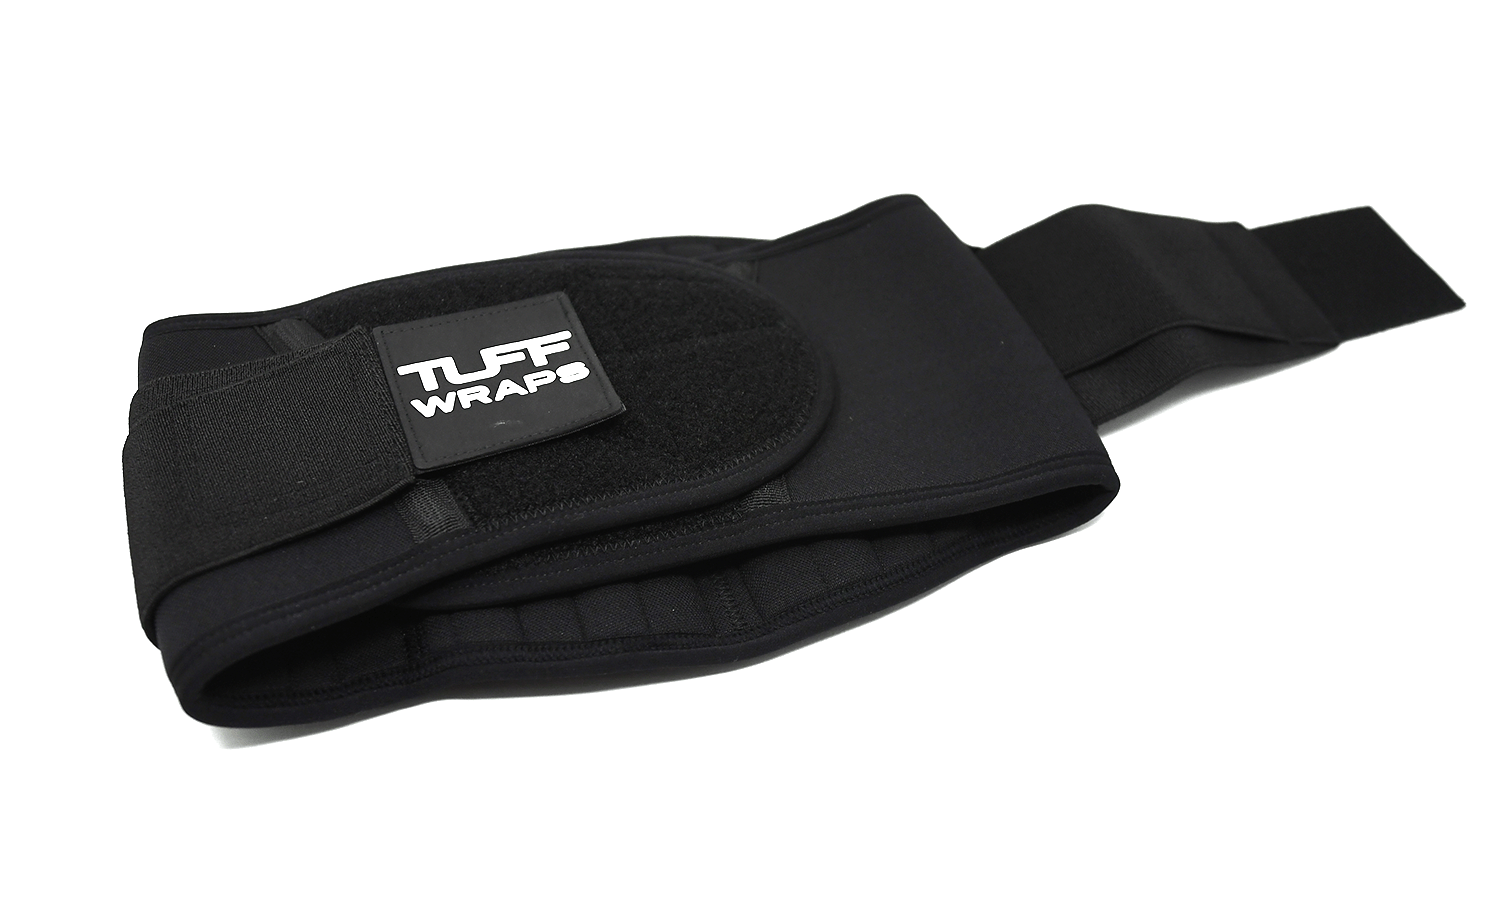 Weight Lifting Back Brace Belt Stretchable Compression Waist Trainer (Waist  Size 27.5-44.5)